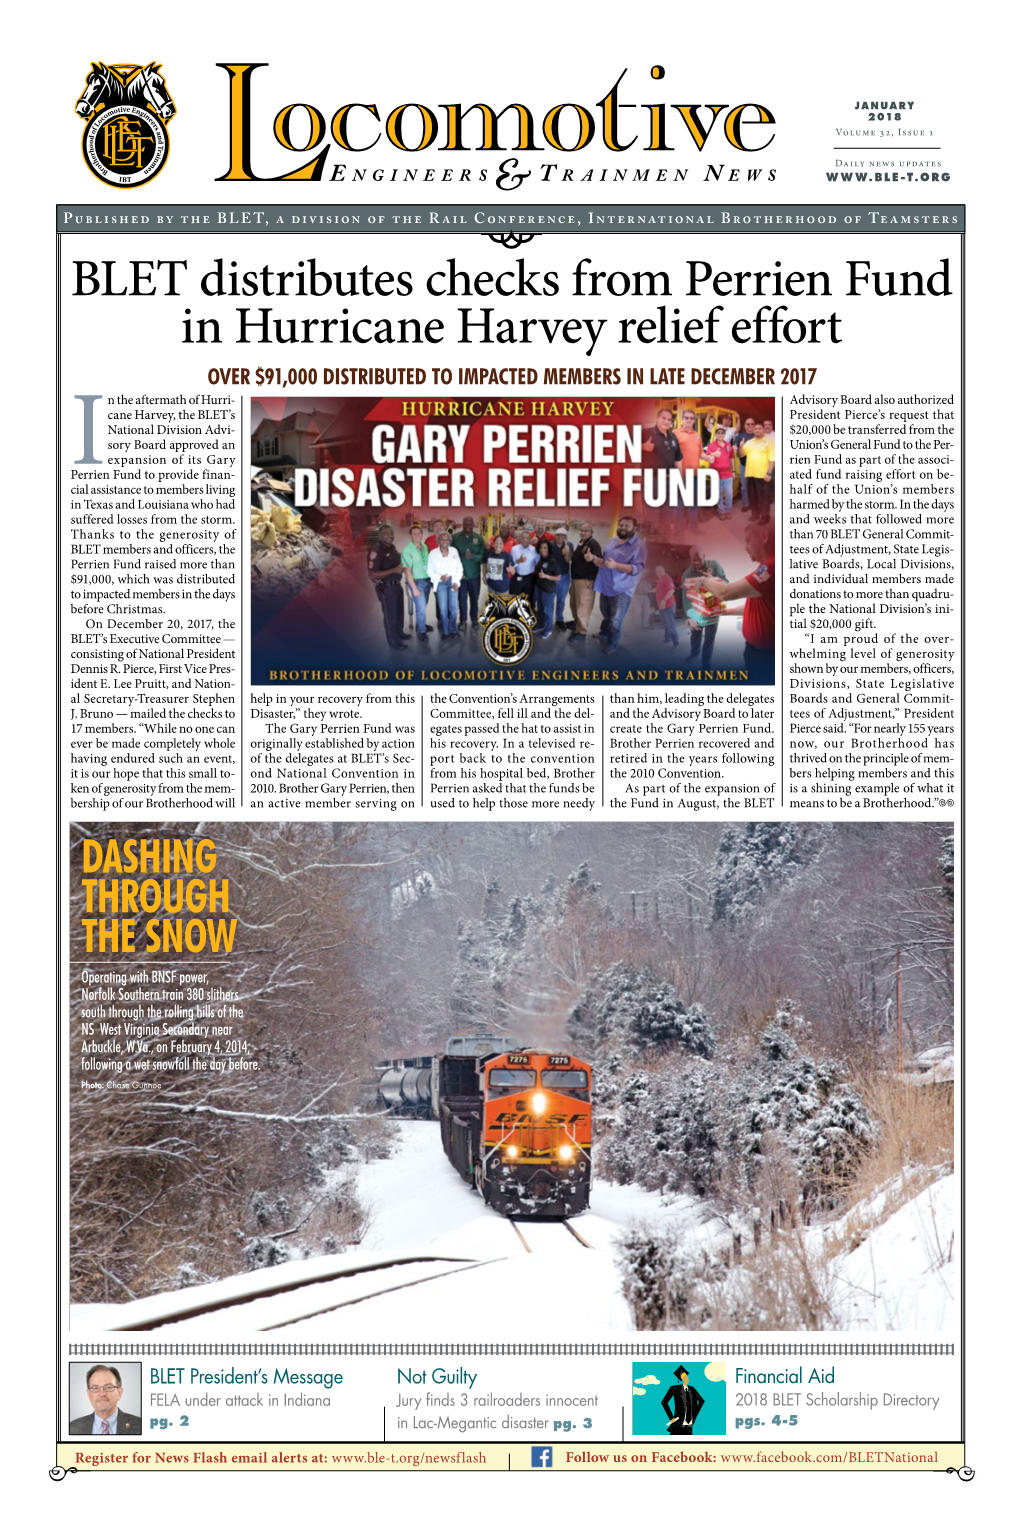 BLET Distributes Checks from Perrien Fund in Hurricane Harvey Relief Effort